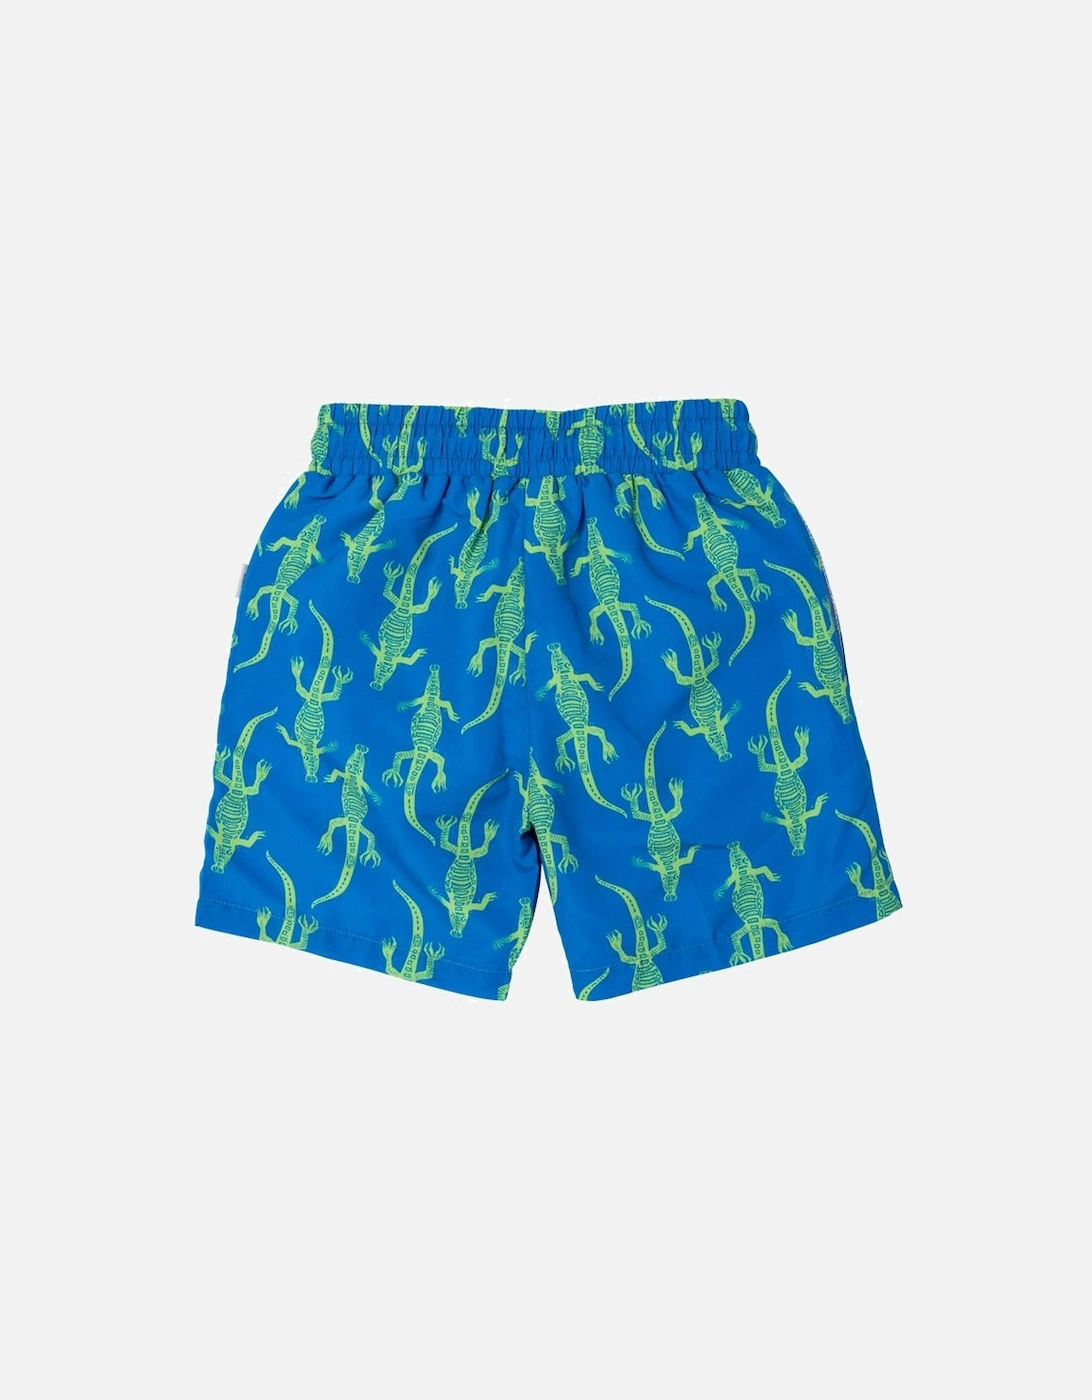 Boys Blue Croc Swimming Shorts